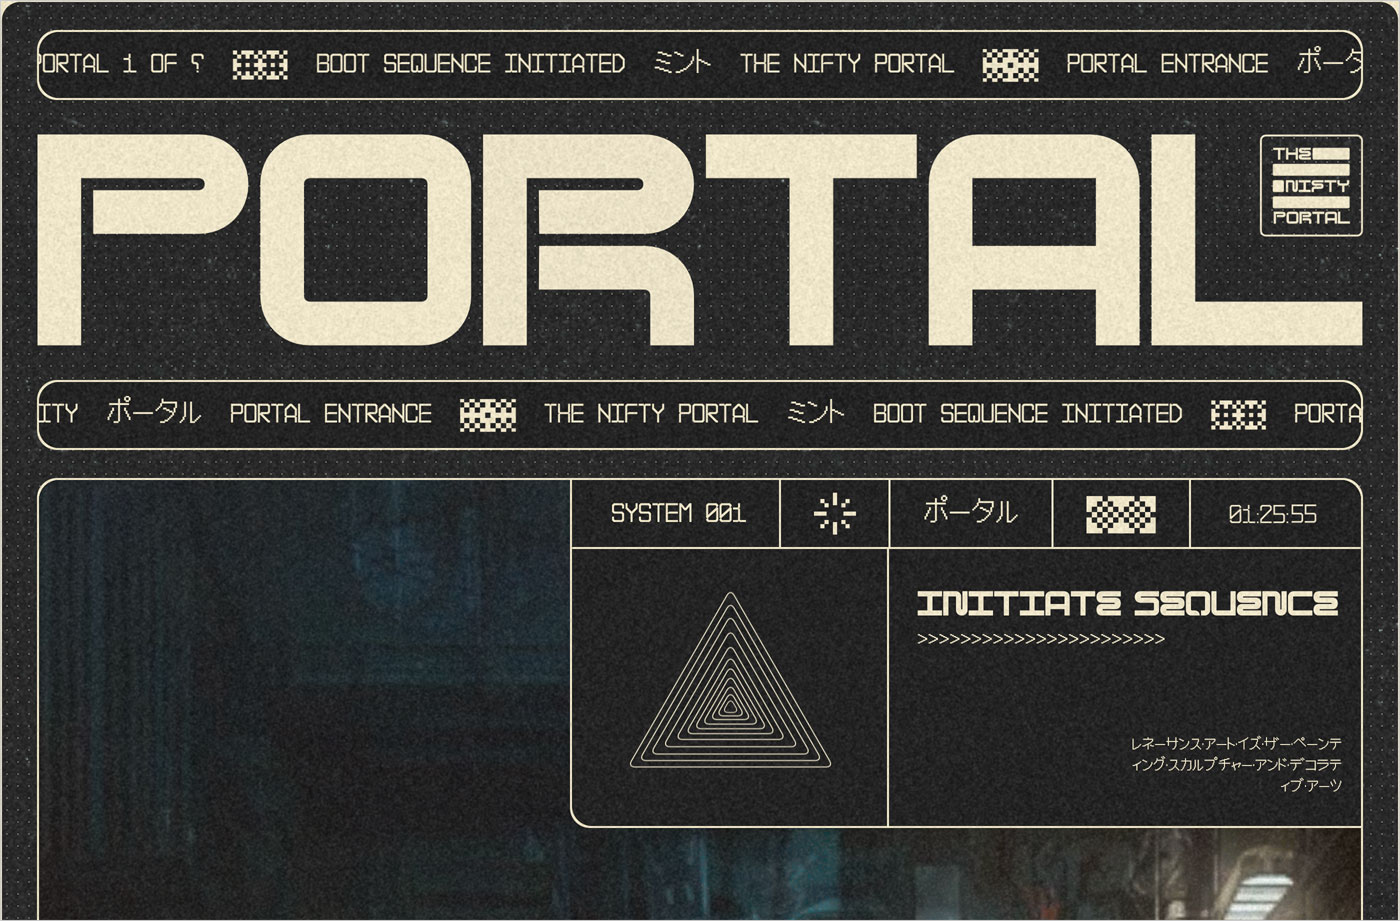 The Nifty Portalウェブサイトの画面キャプチャ画像